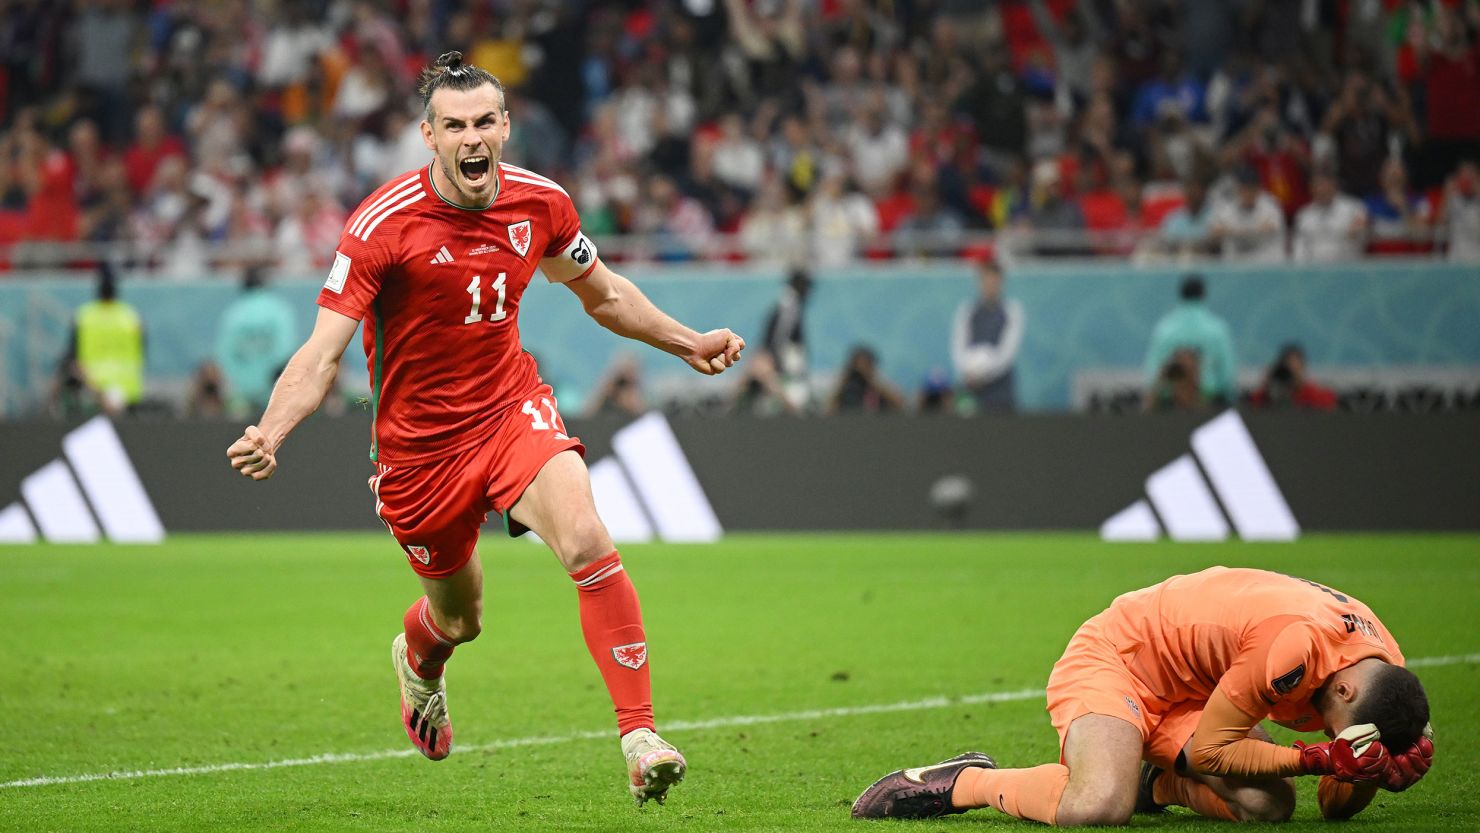 Belgium 3-1 Costa Rica LIVE SCORE: Latest updates from